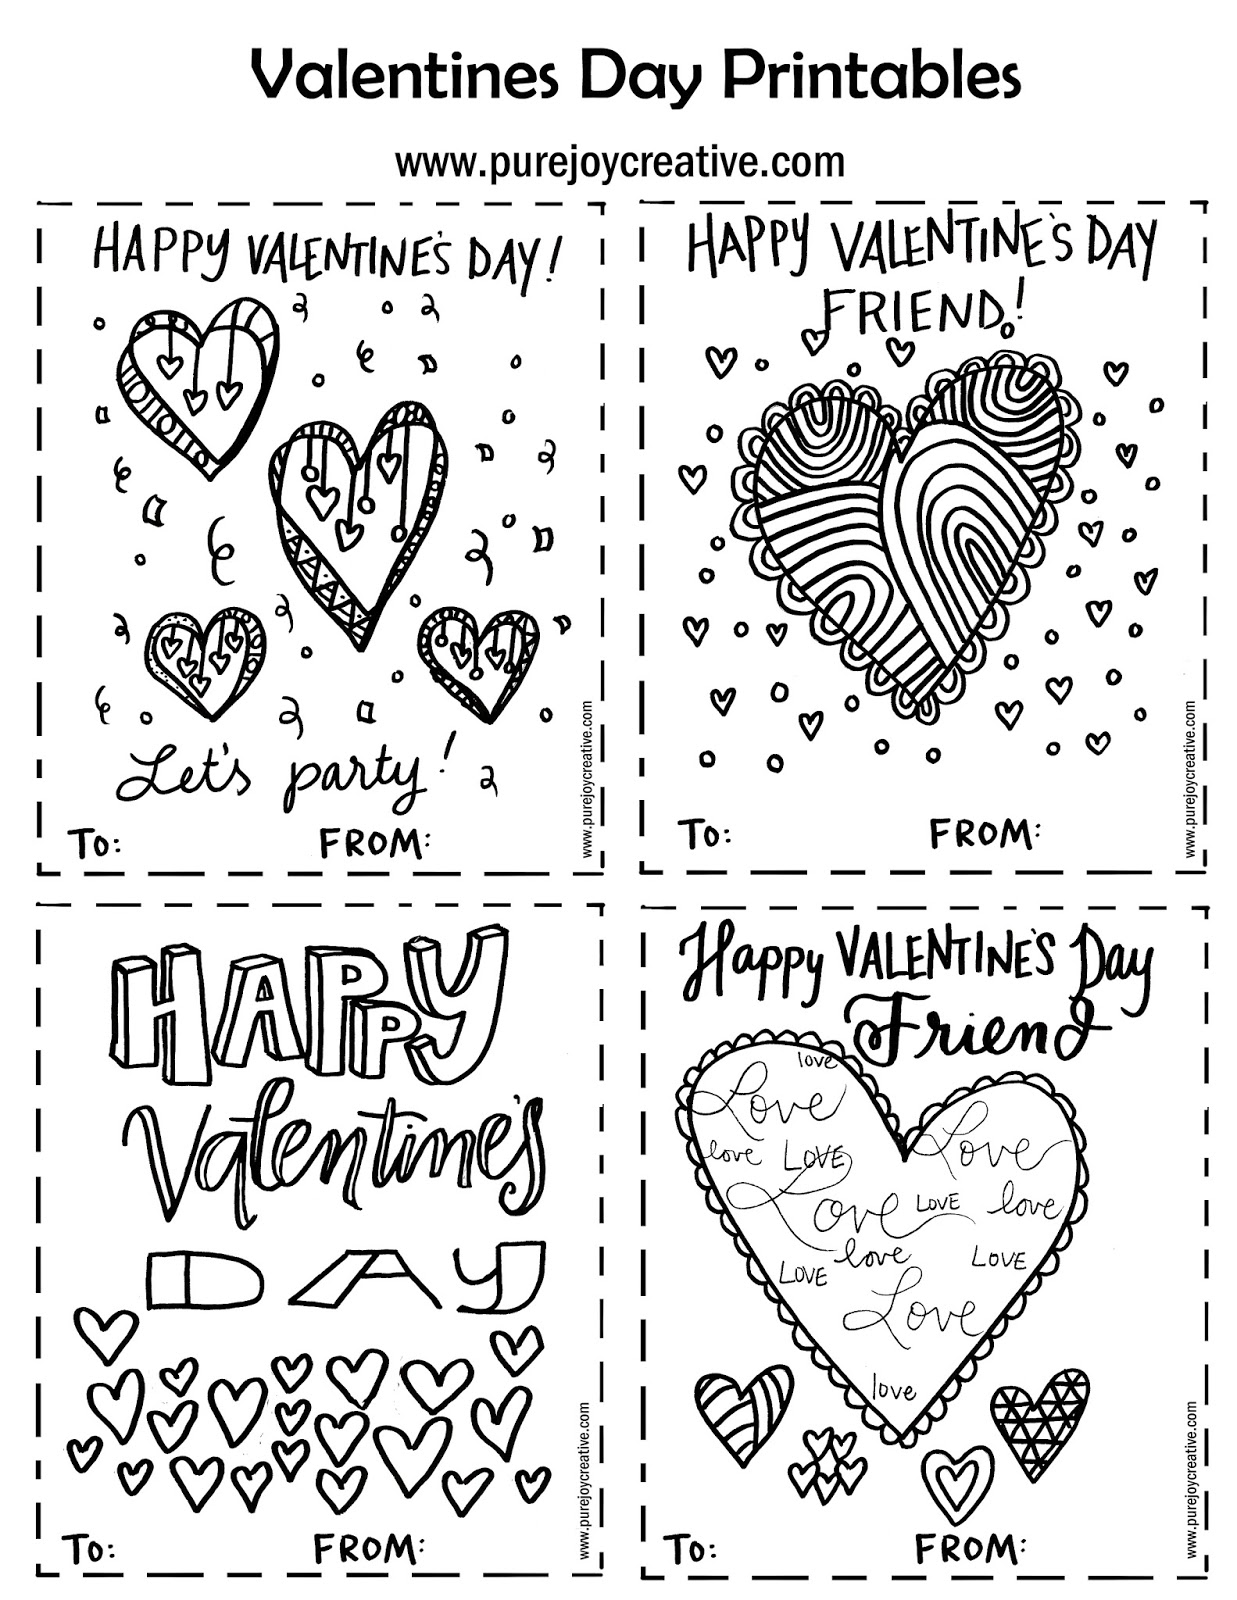 a-glimpse-inside-fun-free-valentine-printables